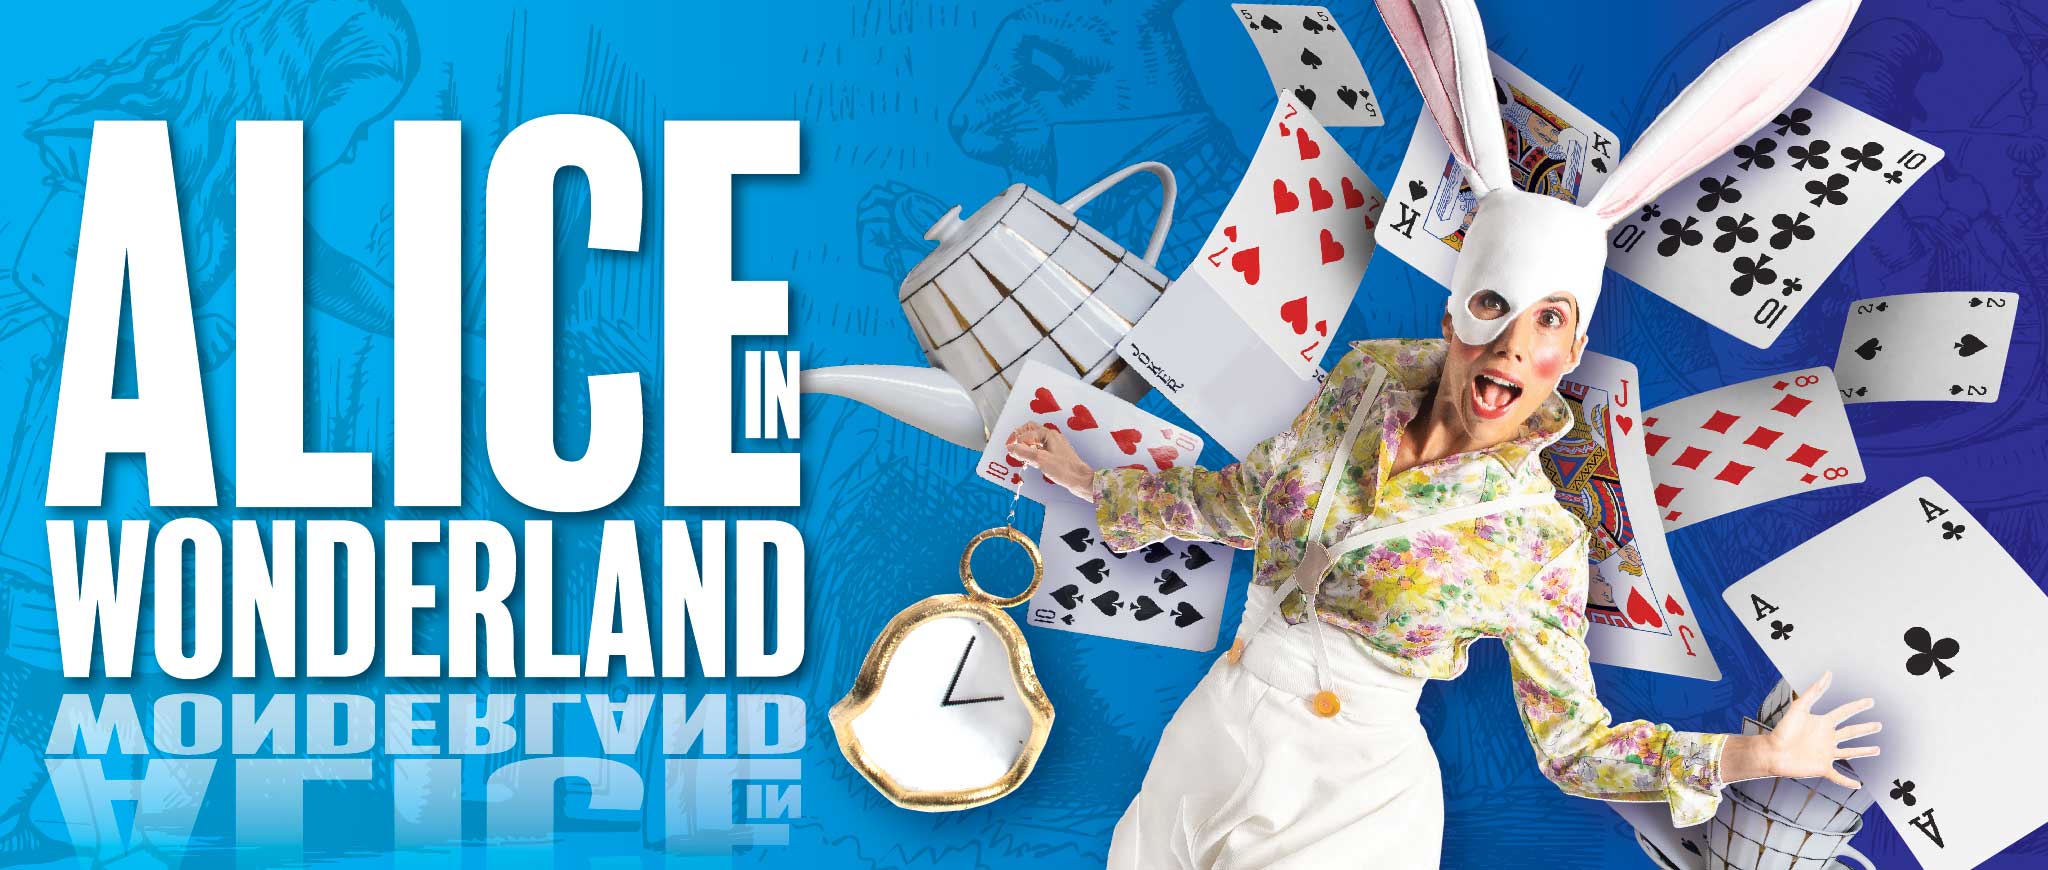 Alice In Wonderland Coming to the FL Chautauqua Theatre Stage